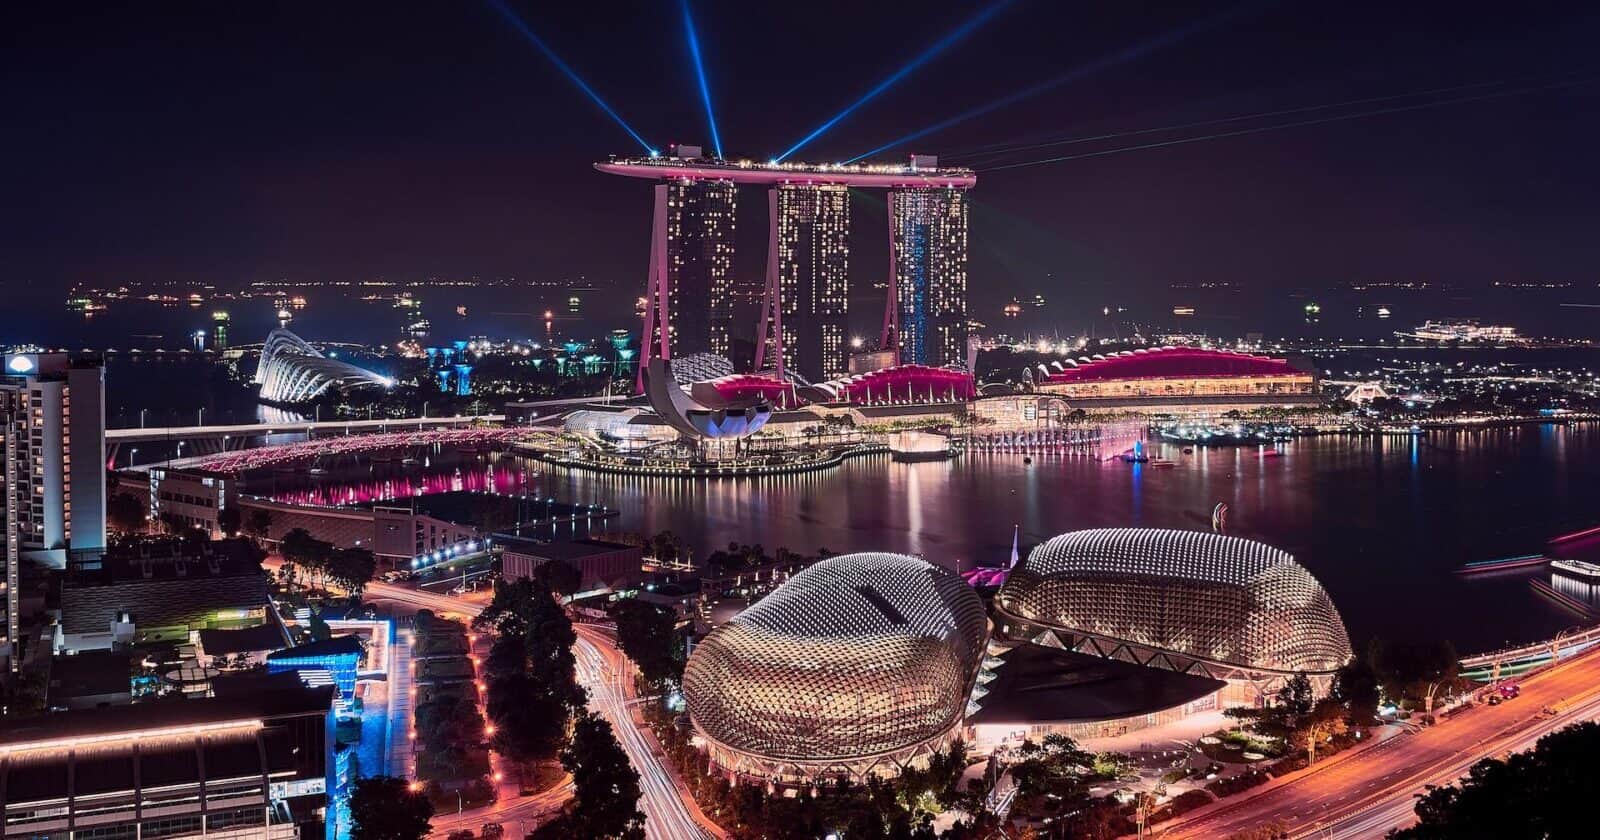 Singapore's MAS Bet $150M To Accelerate Web3 Innovation